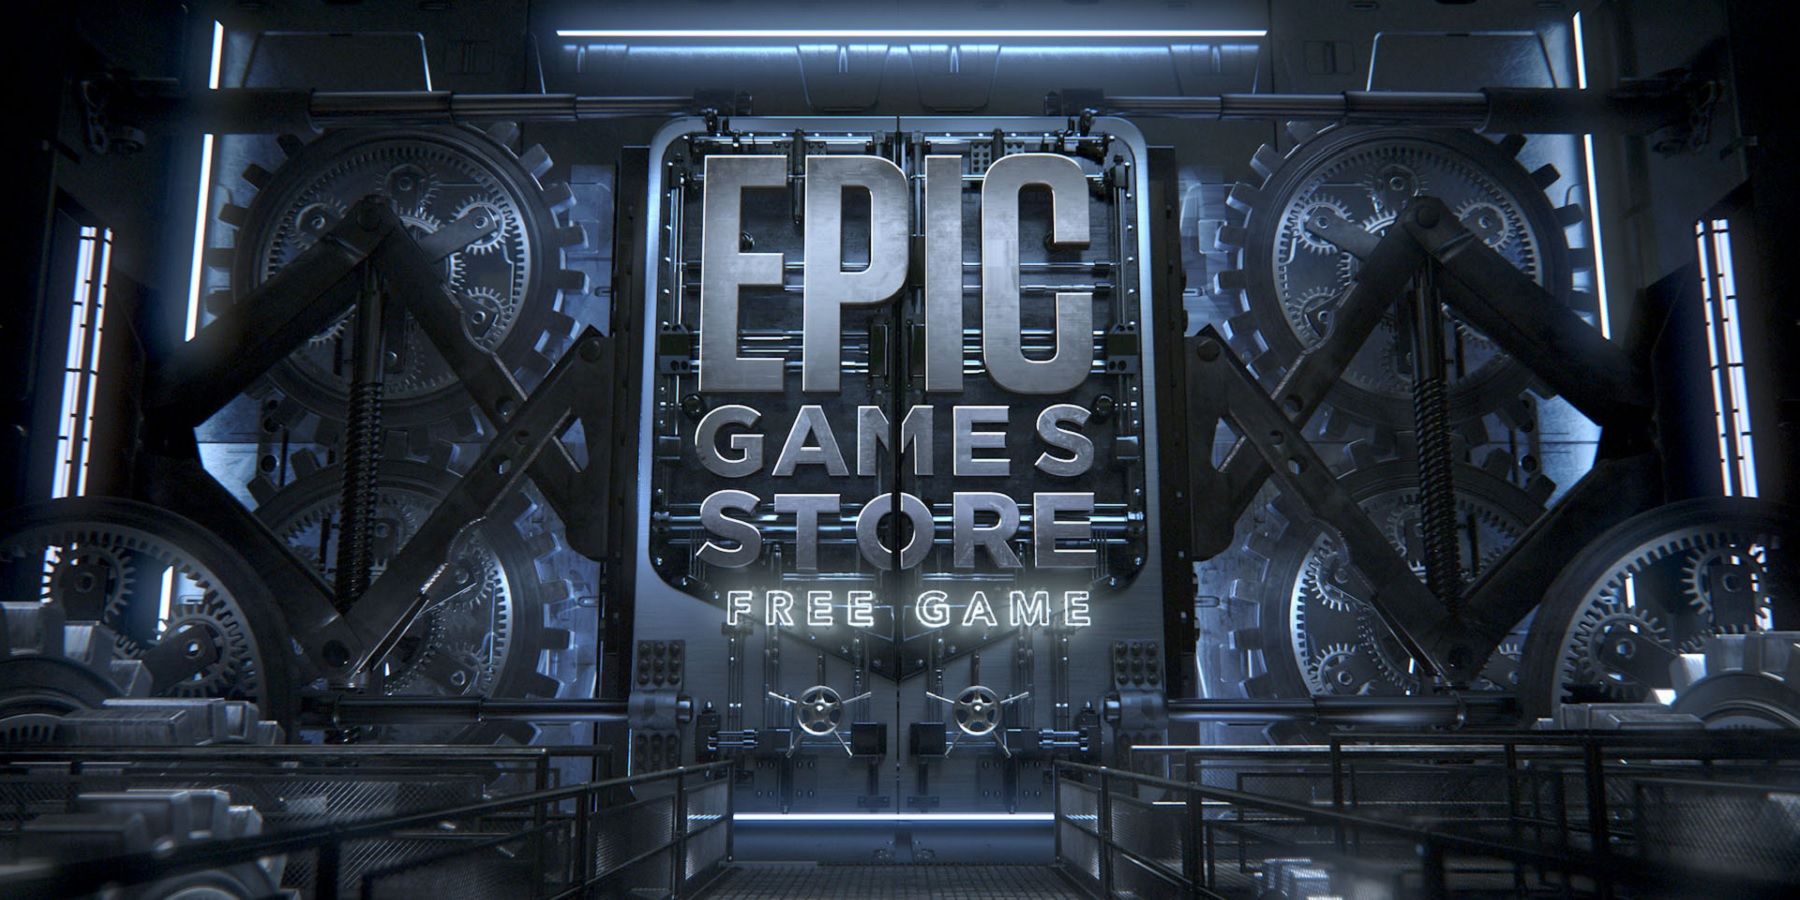 Epic MEGA Sale Week Two Highlights! - Epic Games Store